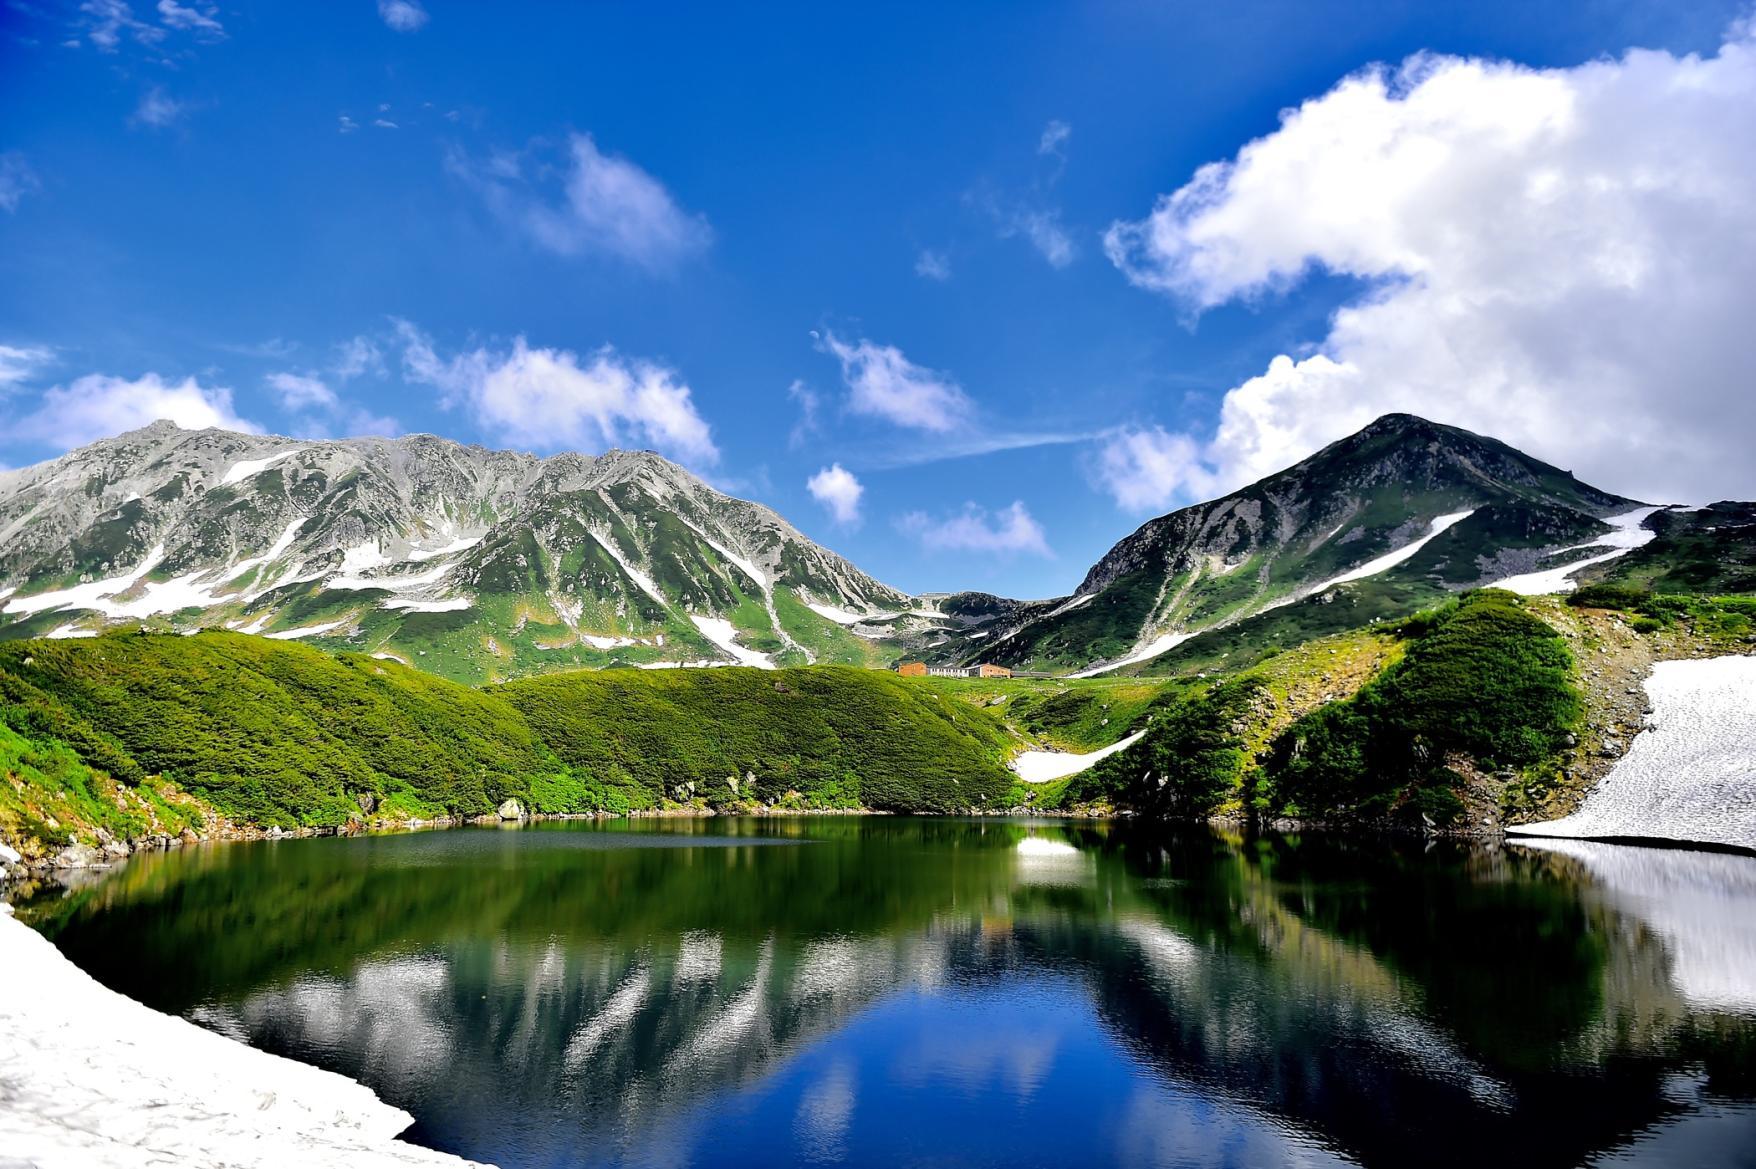 Tateyama Kurobe Alpine Route: A Spectacle-Studded Journey Across the North Japan Alps